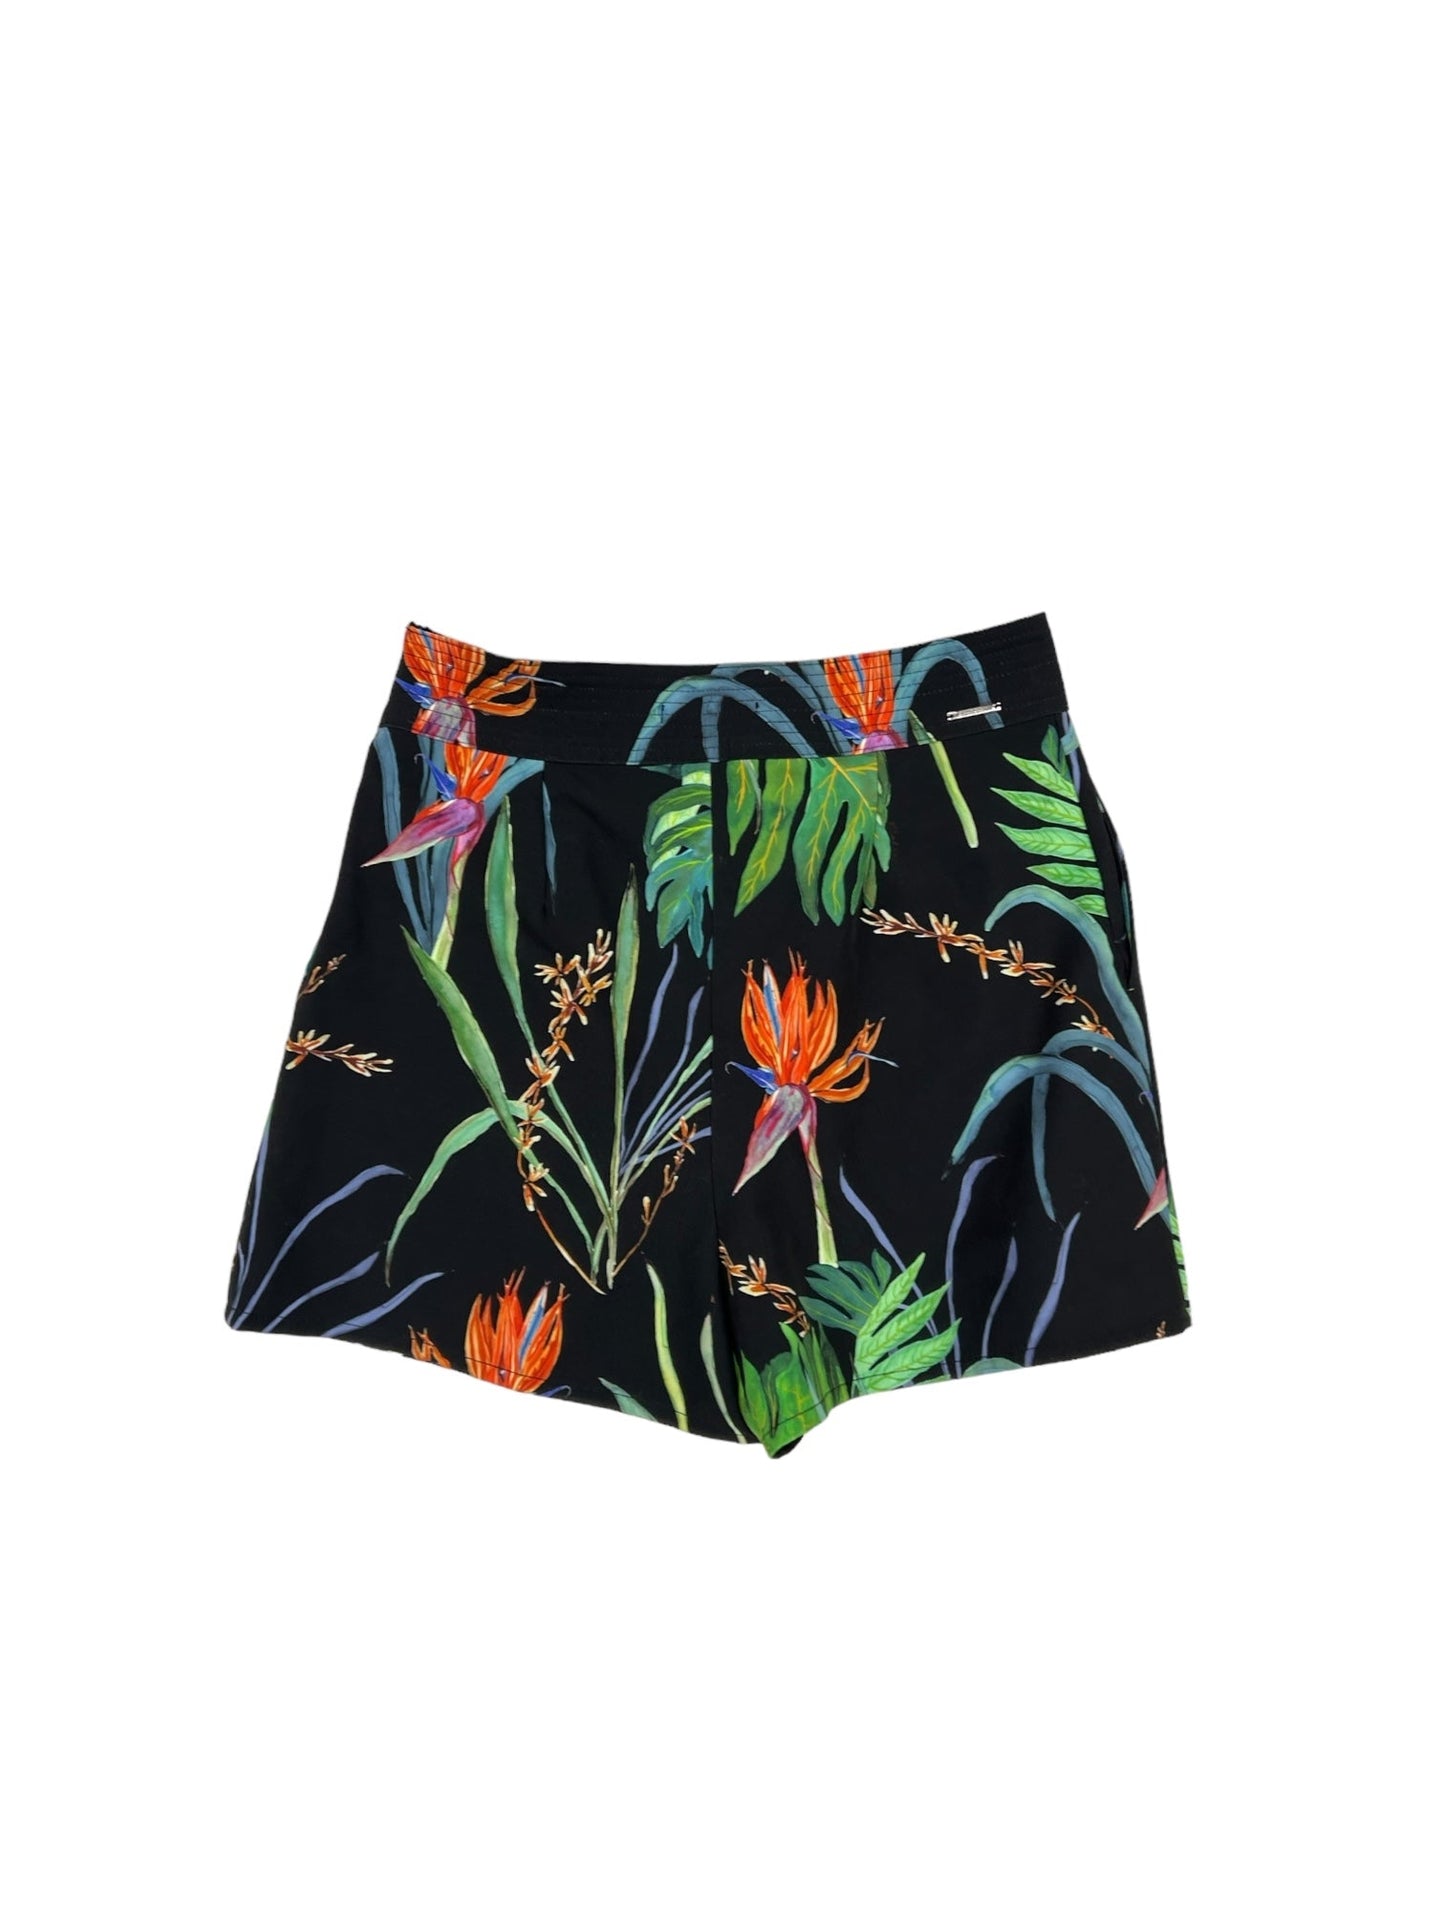 Tropical Print Shorts Clothes Mentor, Size 8